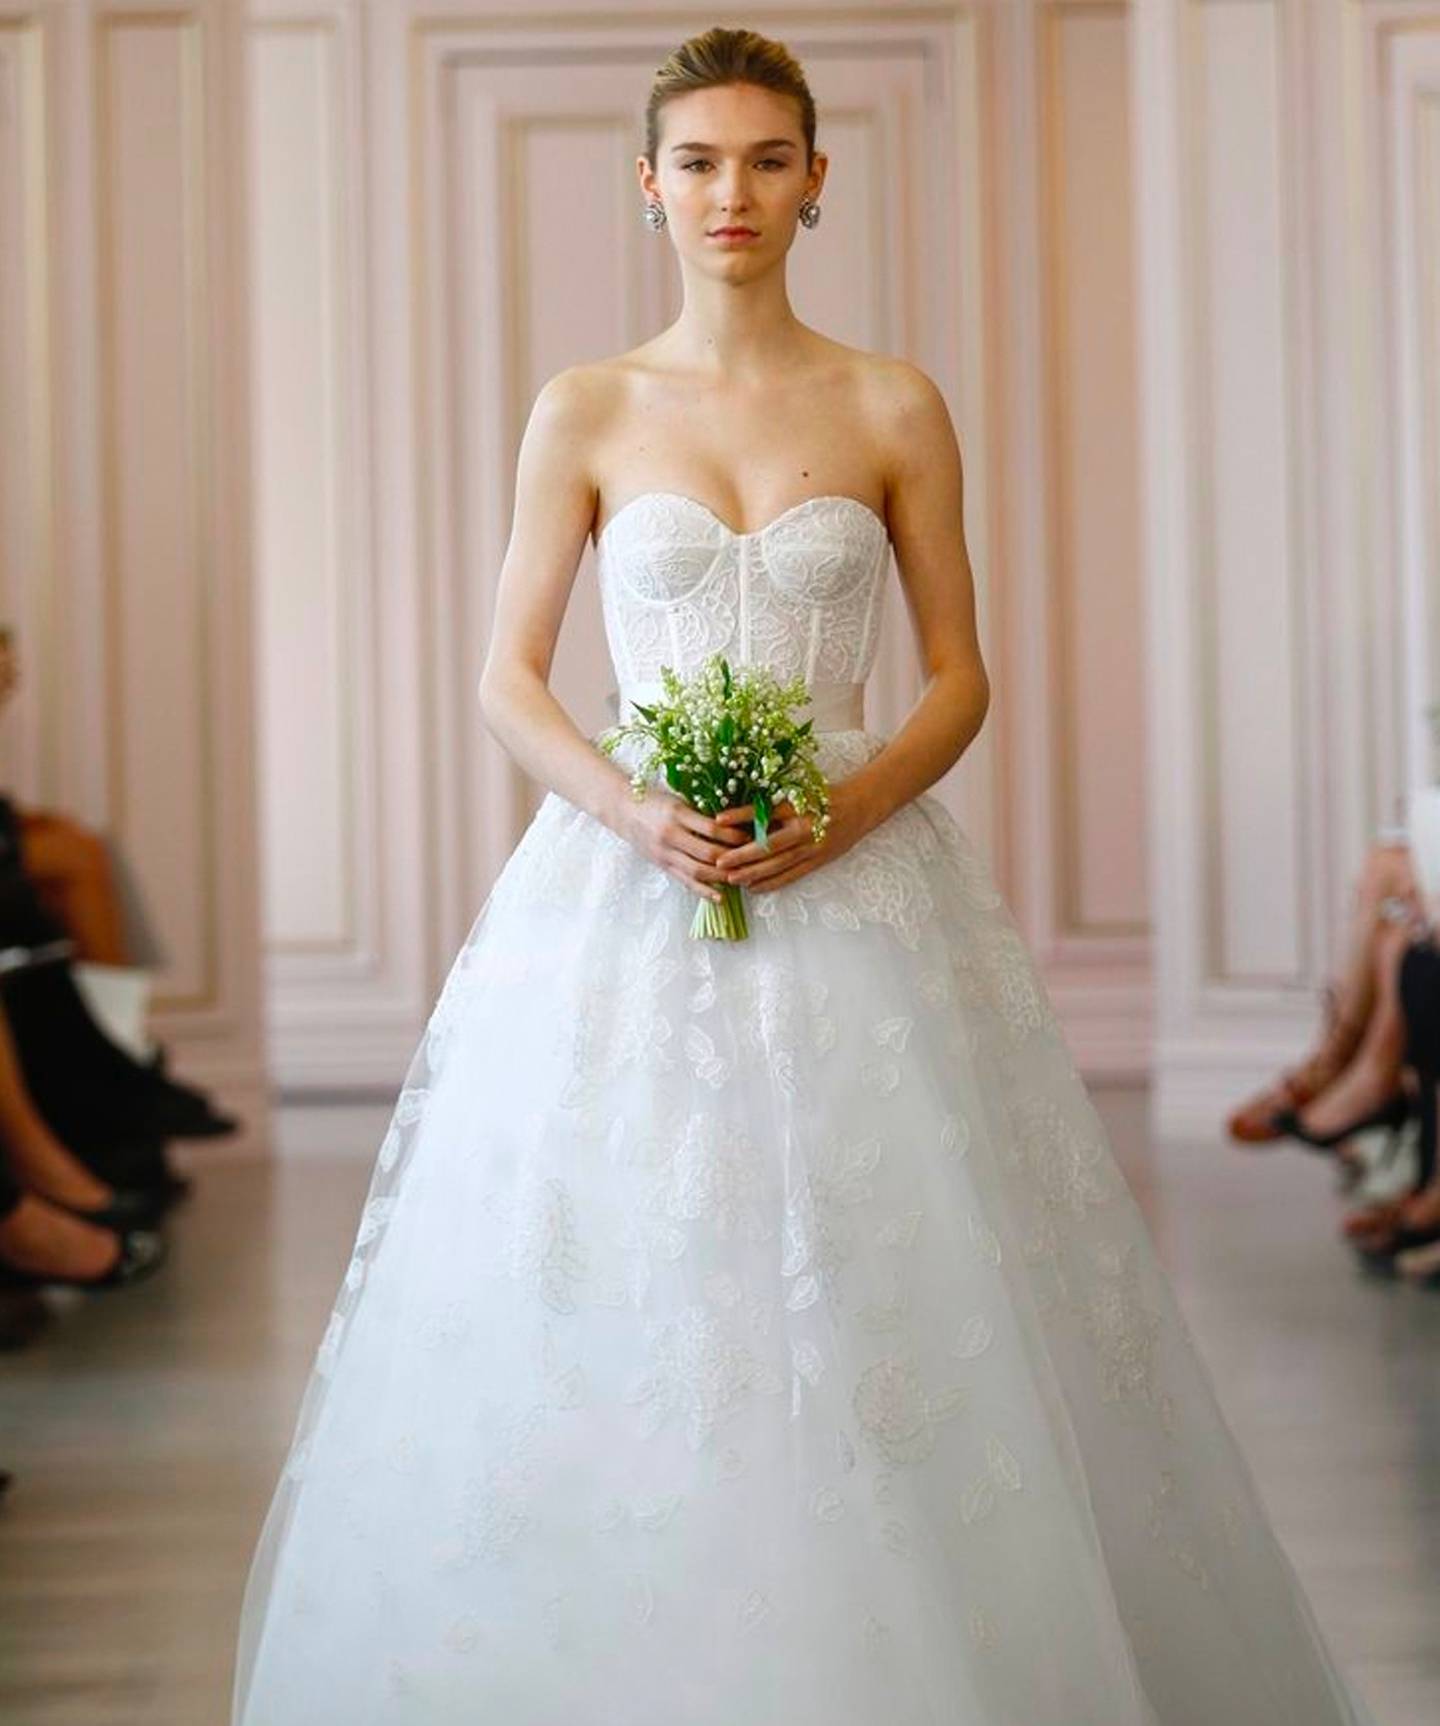 Now it is possible to rent an Oscar de la Renta wedding gown at Designer-24. Photo: Designer-24